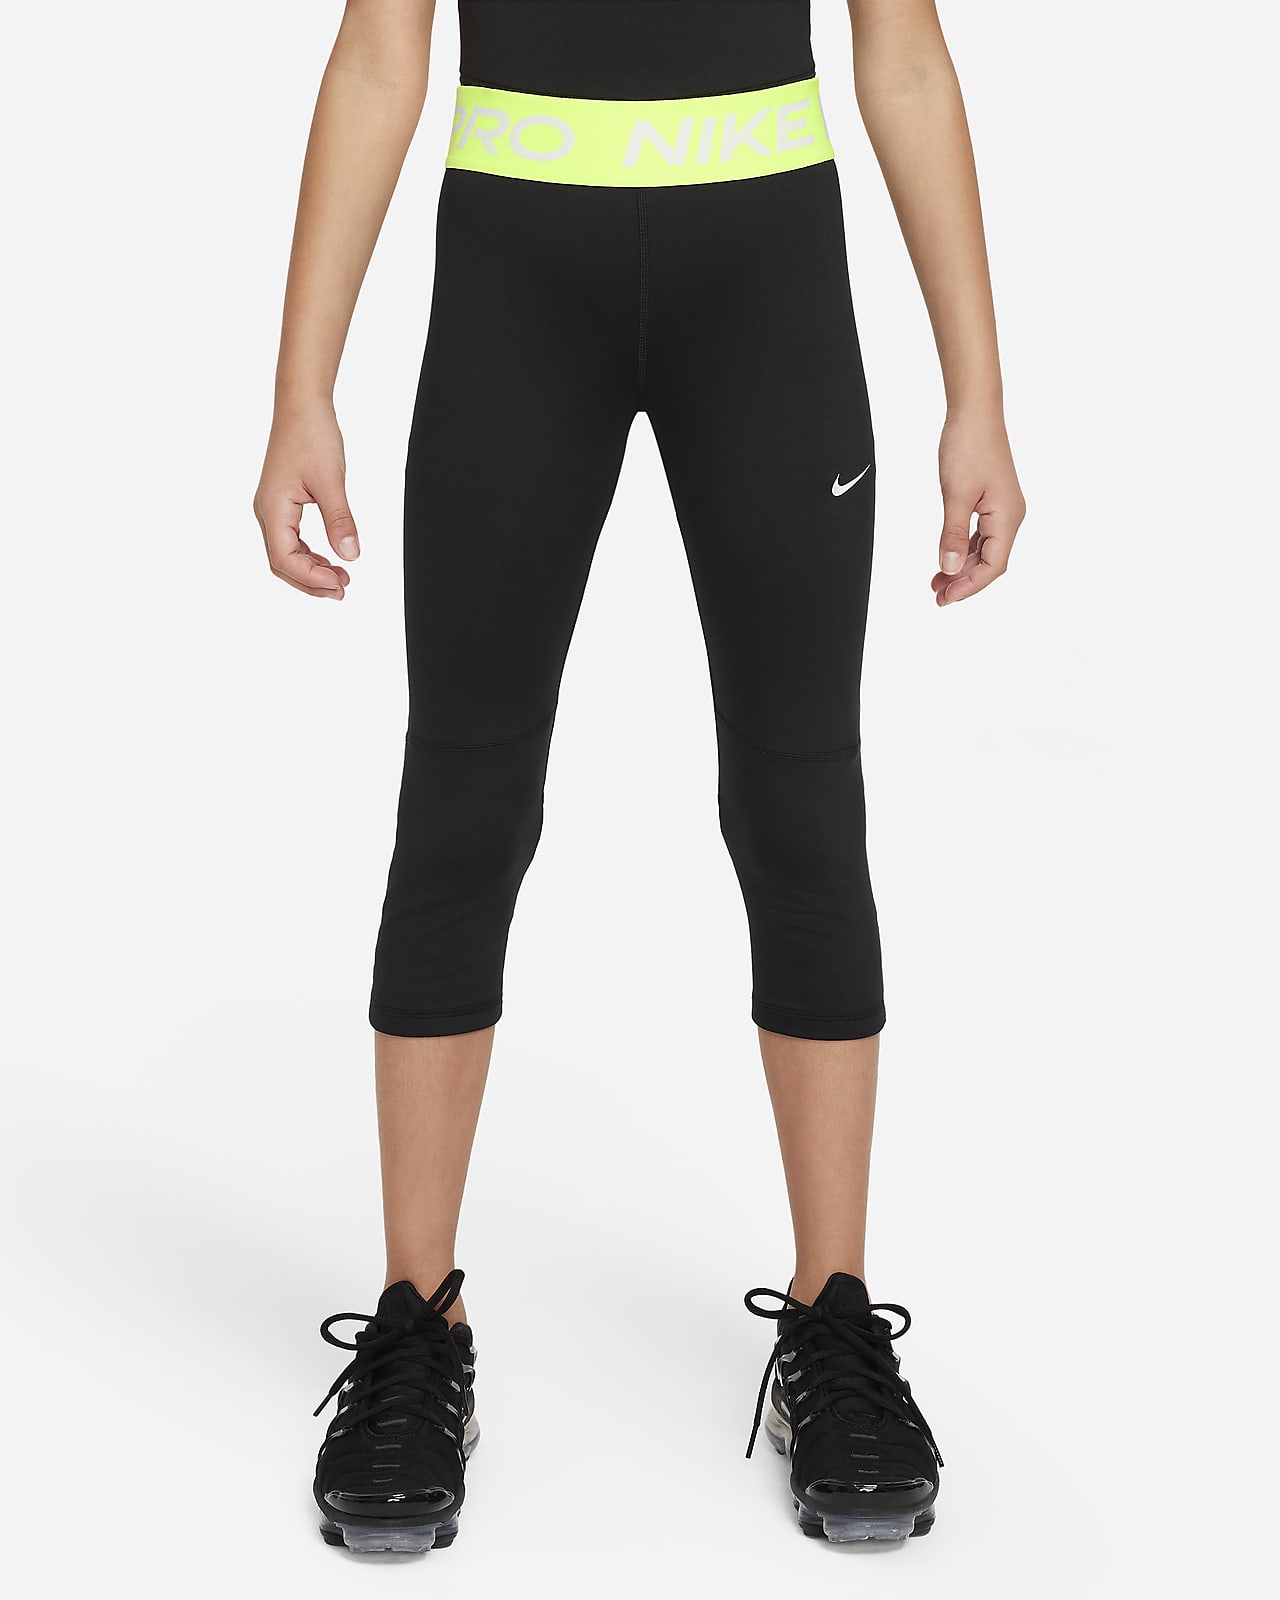 Legging Nike Pro Capri Rosa - Compre Agora